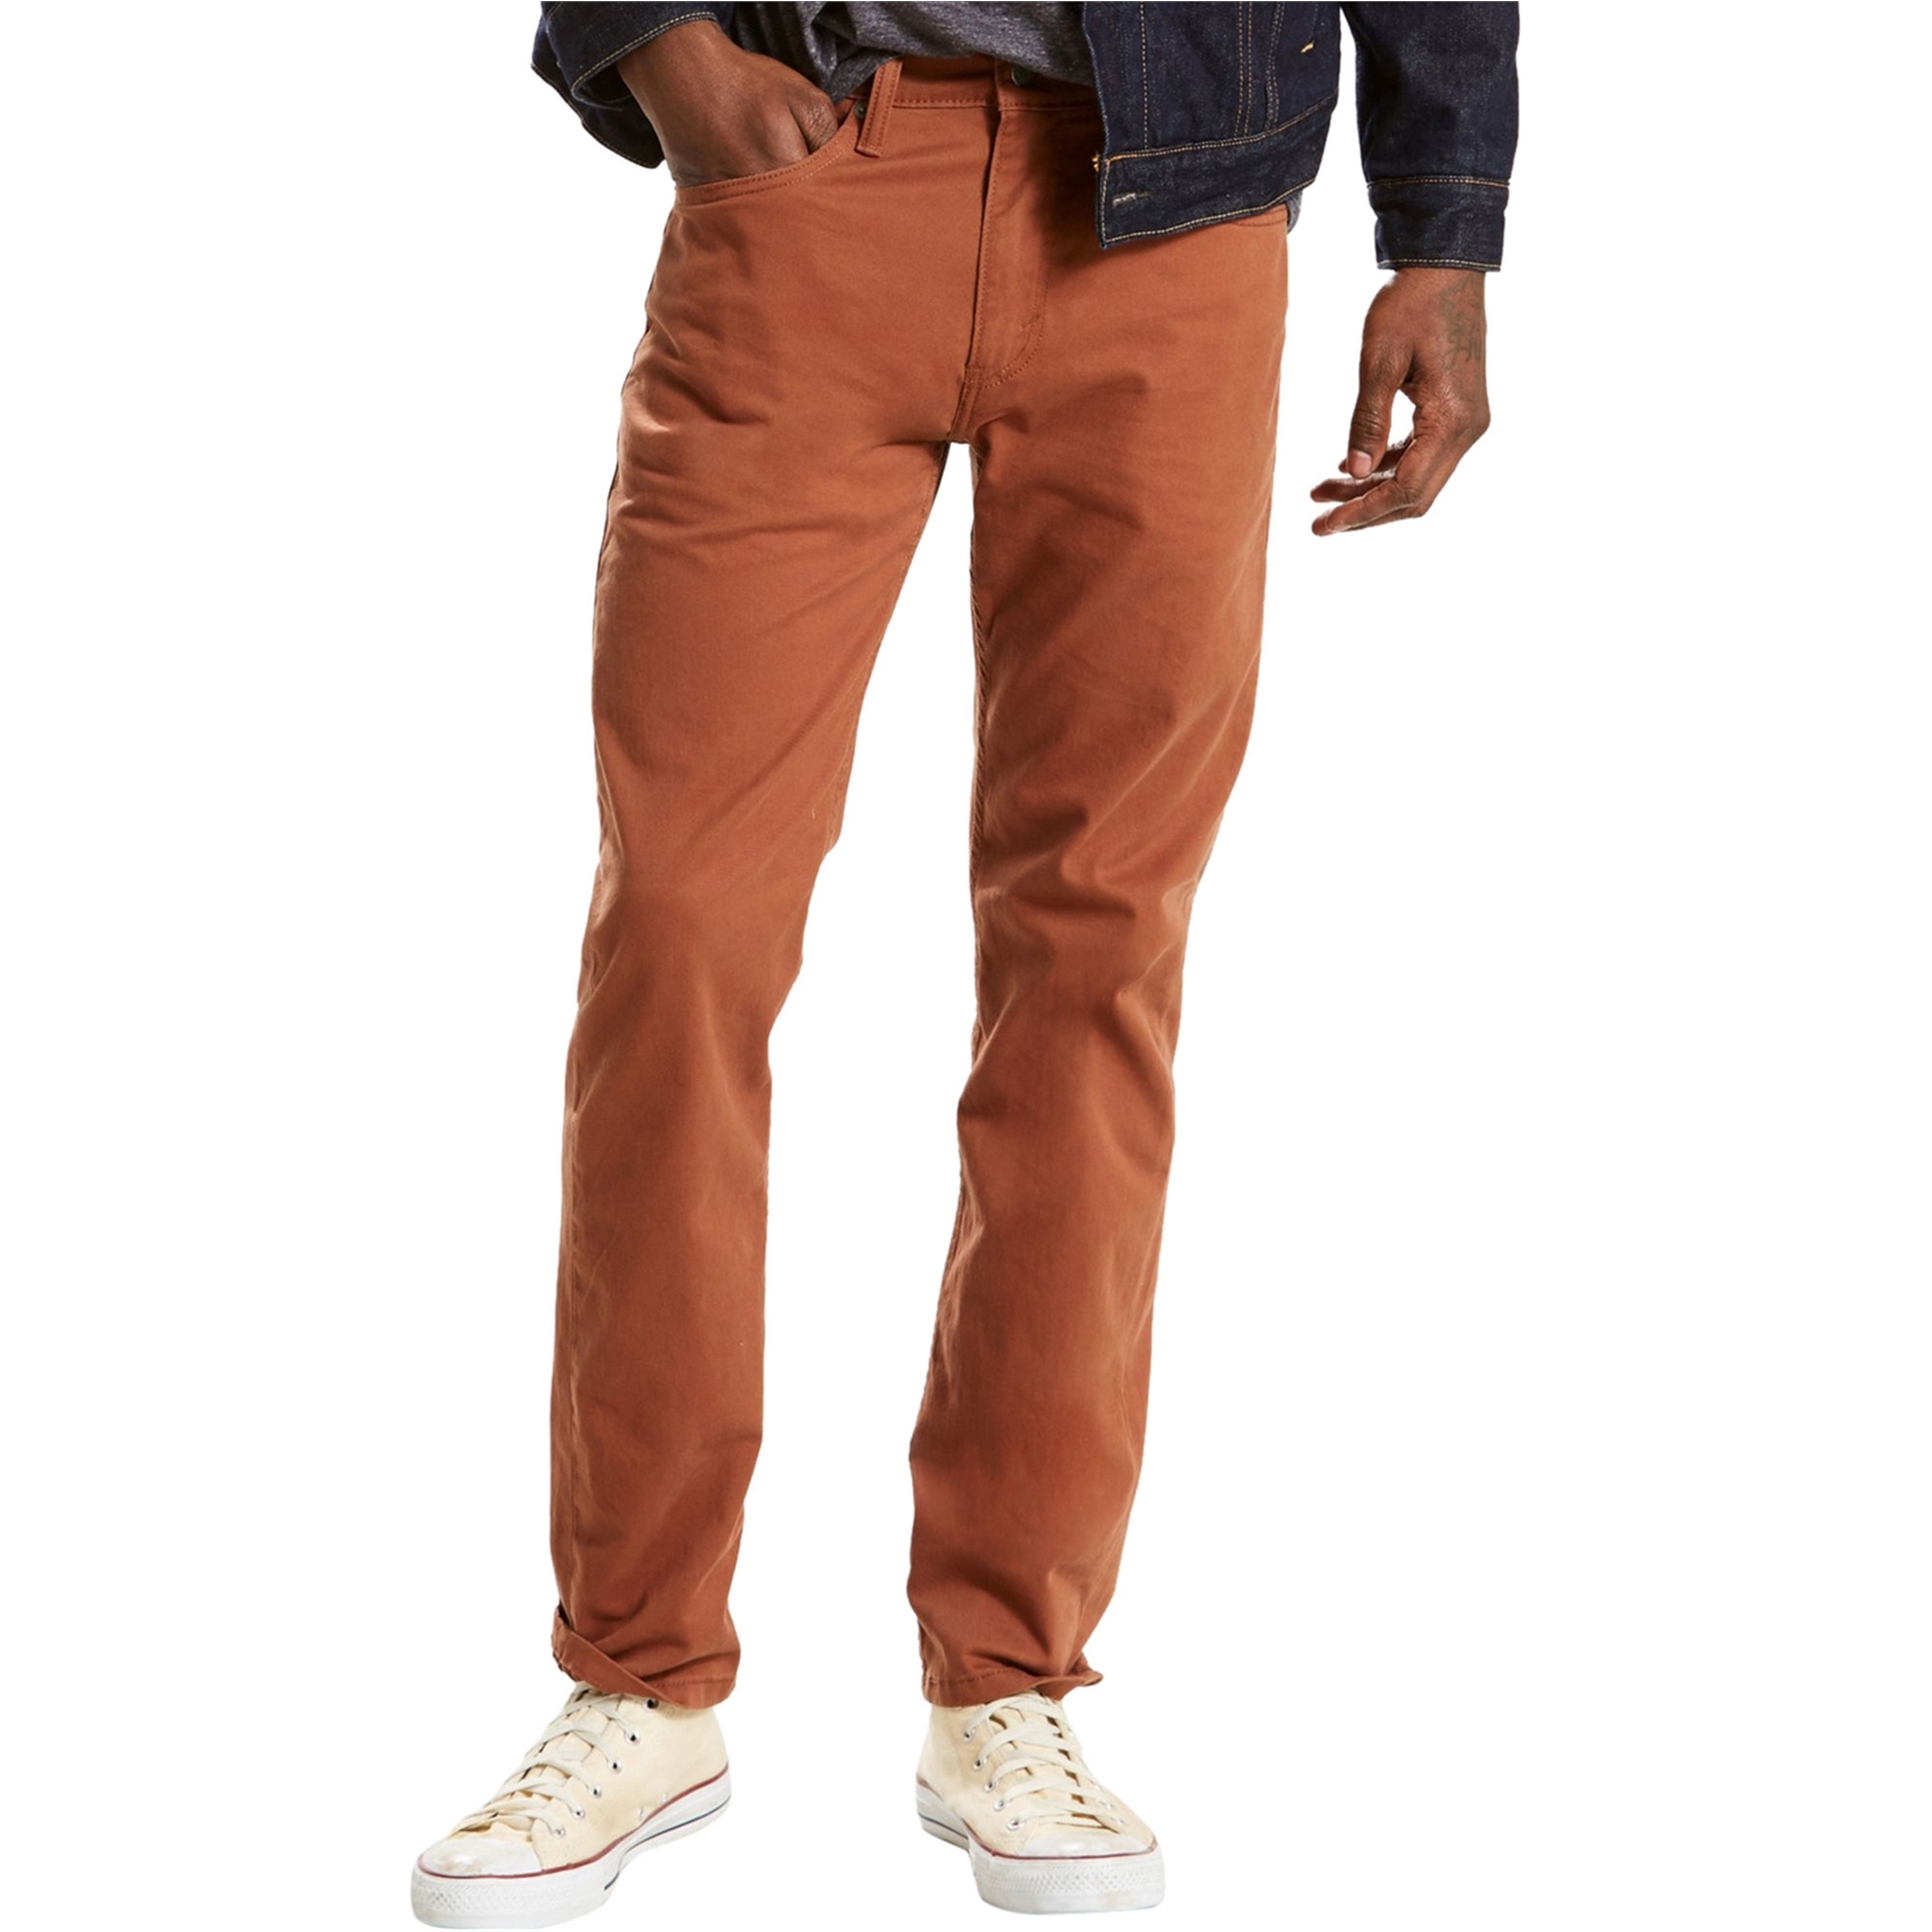 Buy a Mens Levi's Taper Soft Twill Slim Fit Jeans Online 